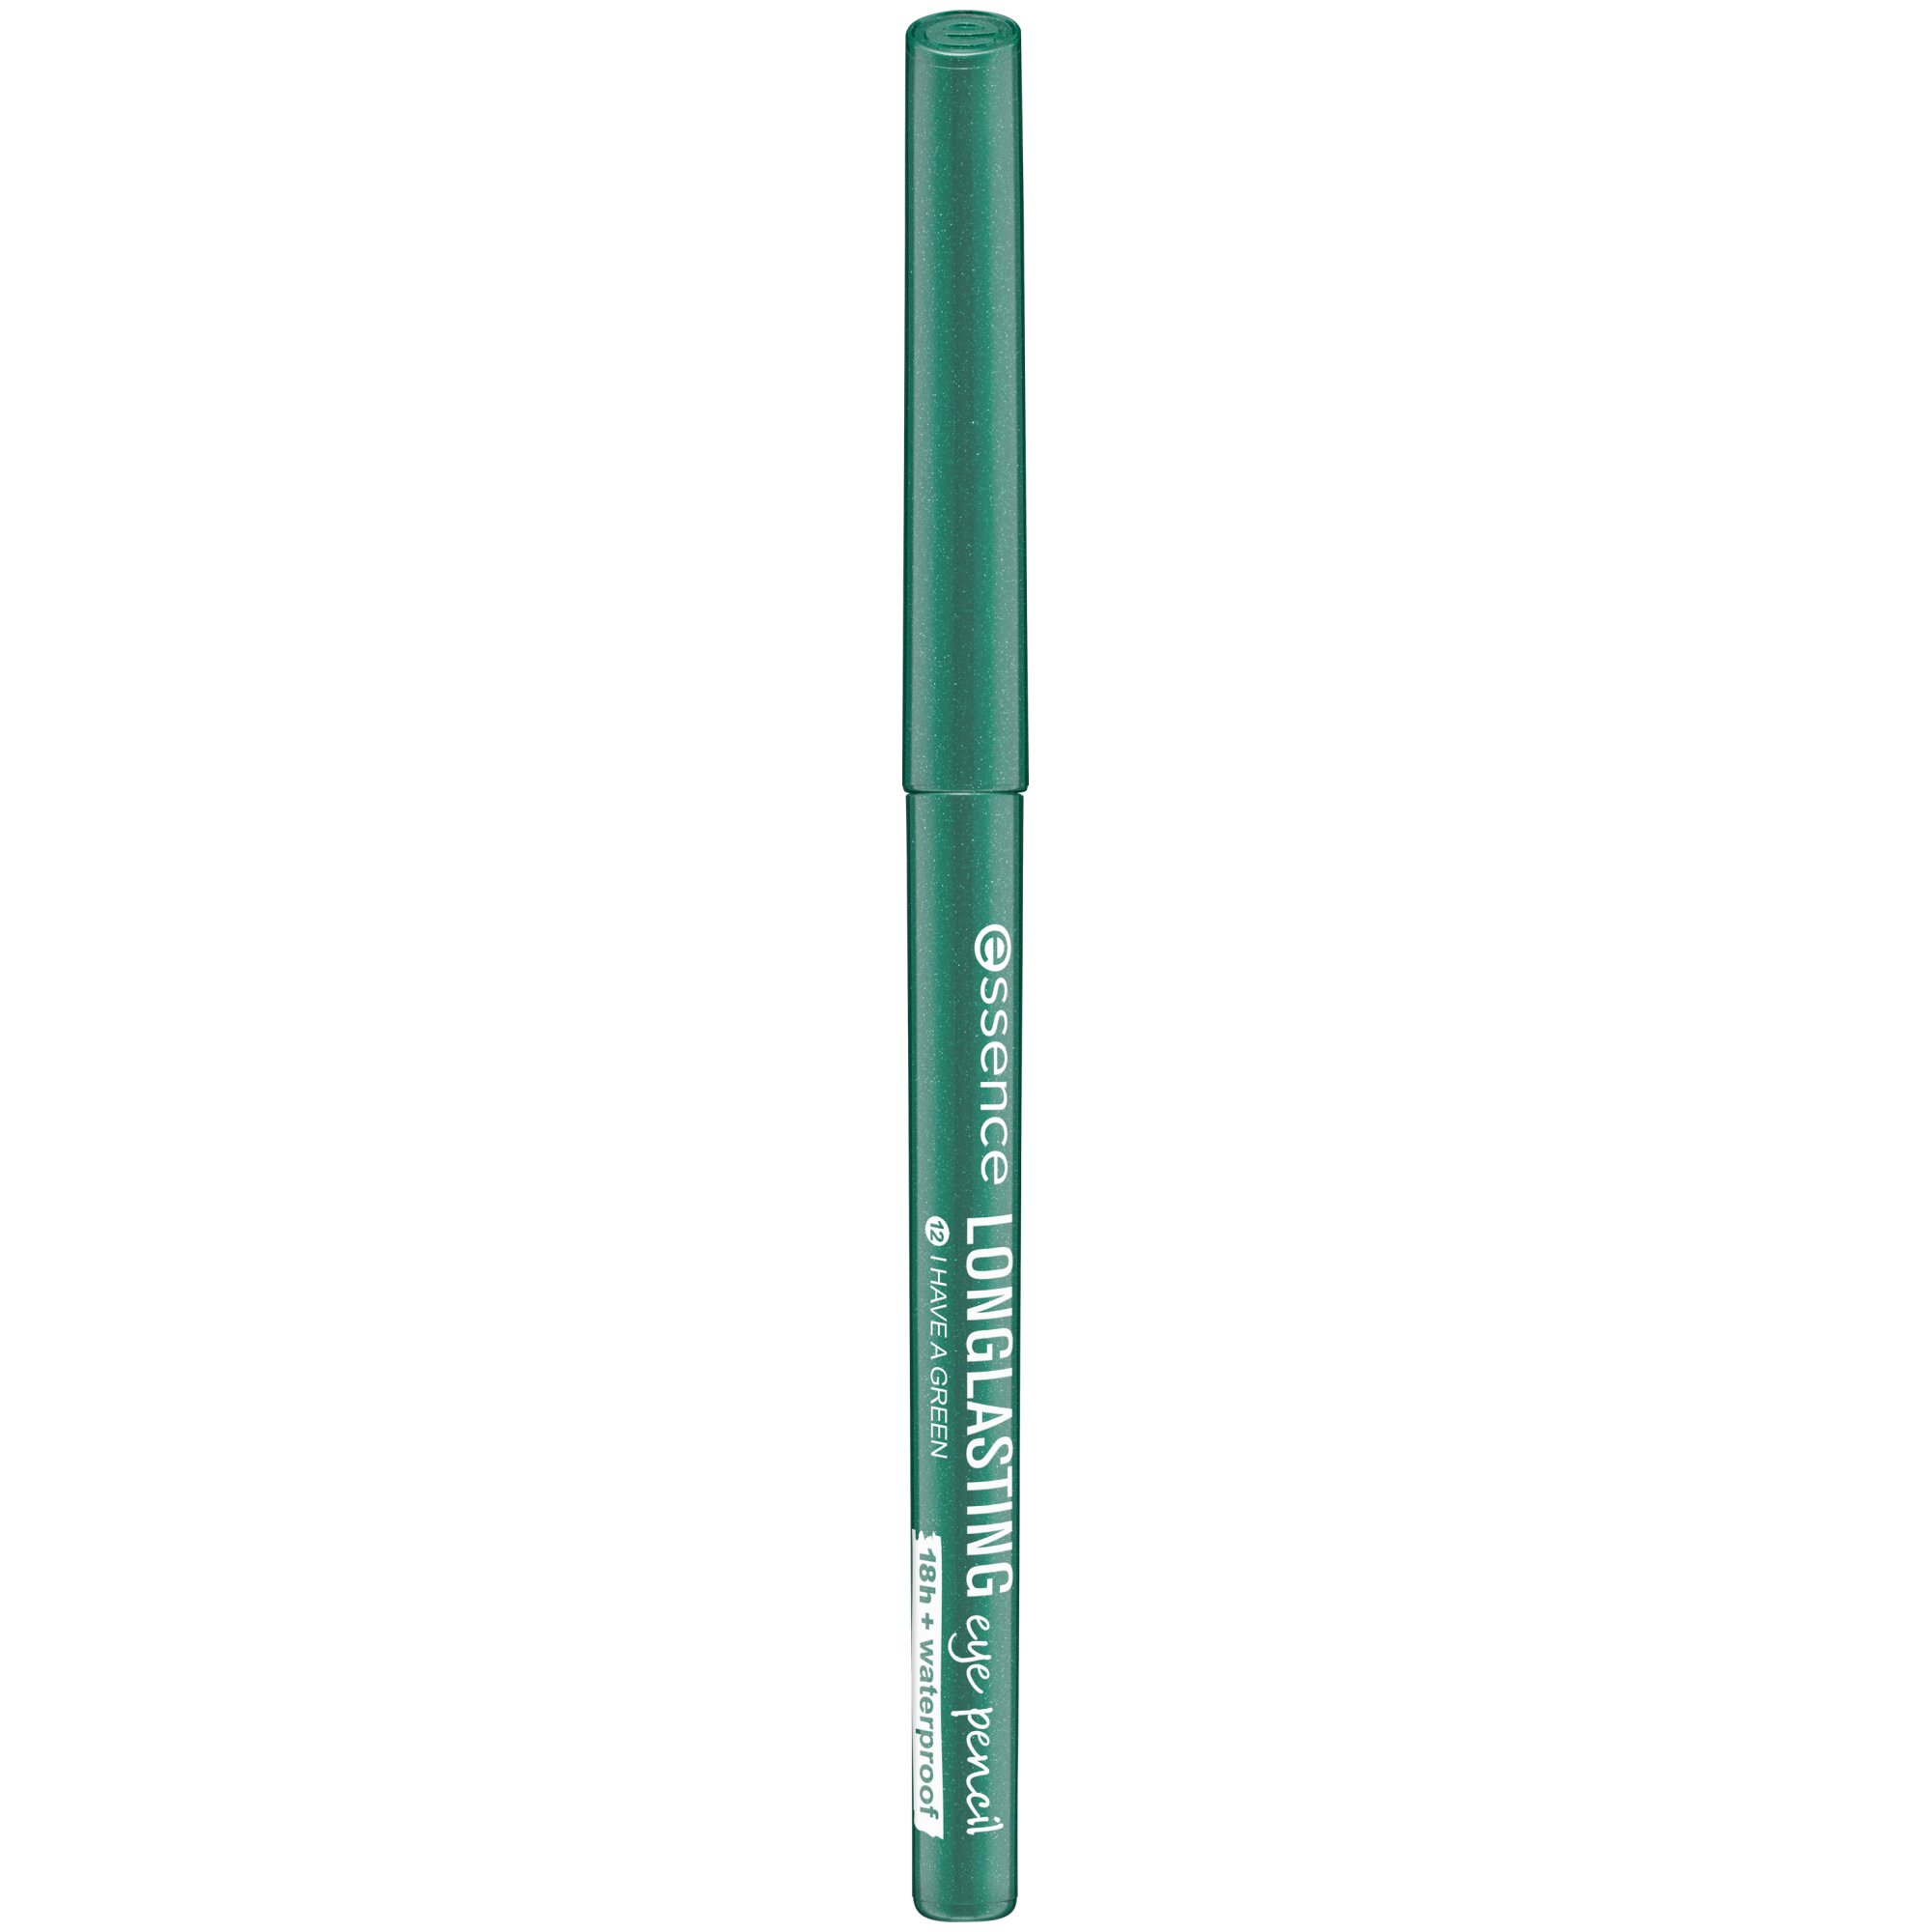 Creion pentru ochi Long-Lasting, 12 - I Have a Green, 0.28 g, Essence